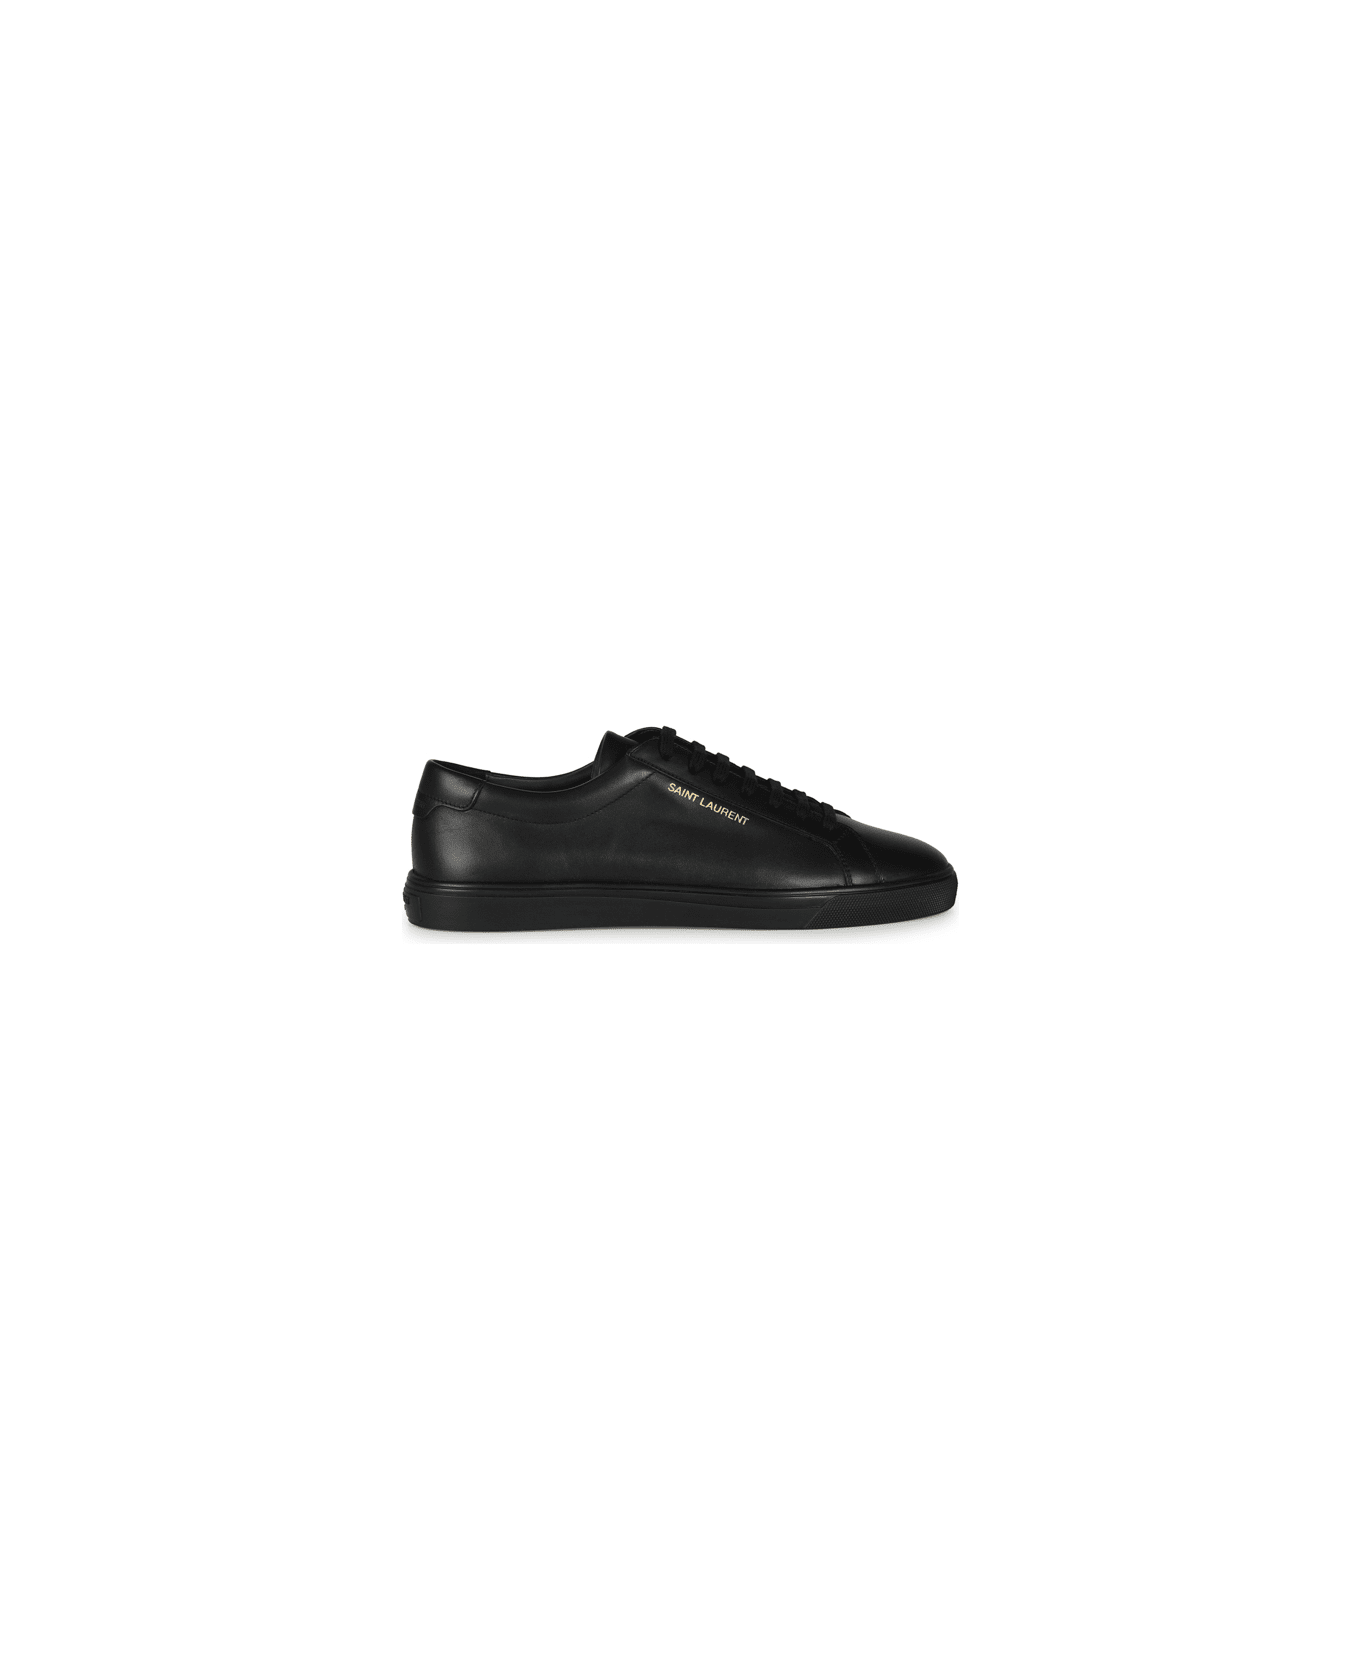 Saint Laurent Andy Sneakers - Black スニーカー